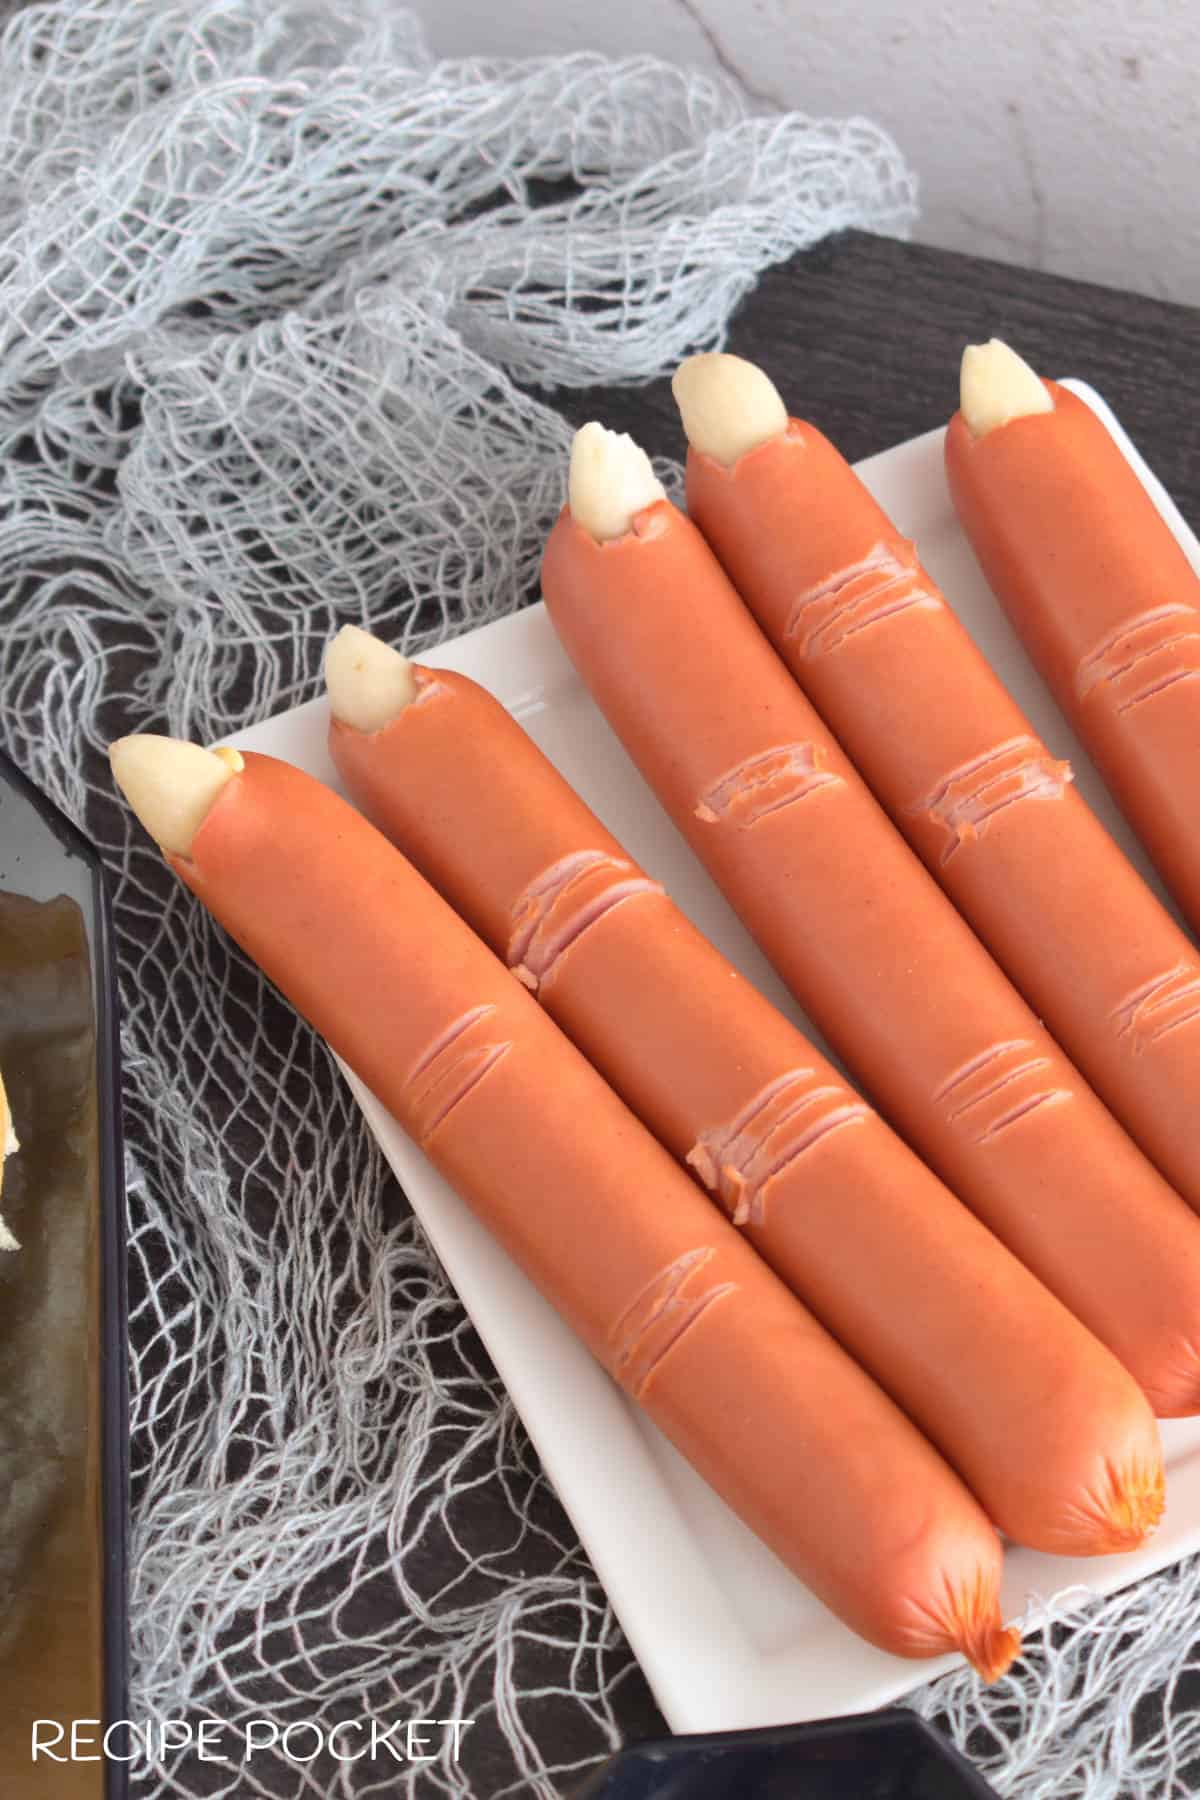 Halloween hot dog fingers with fingernails